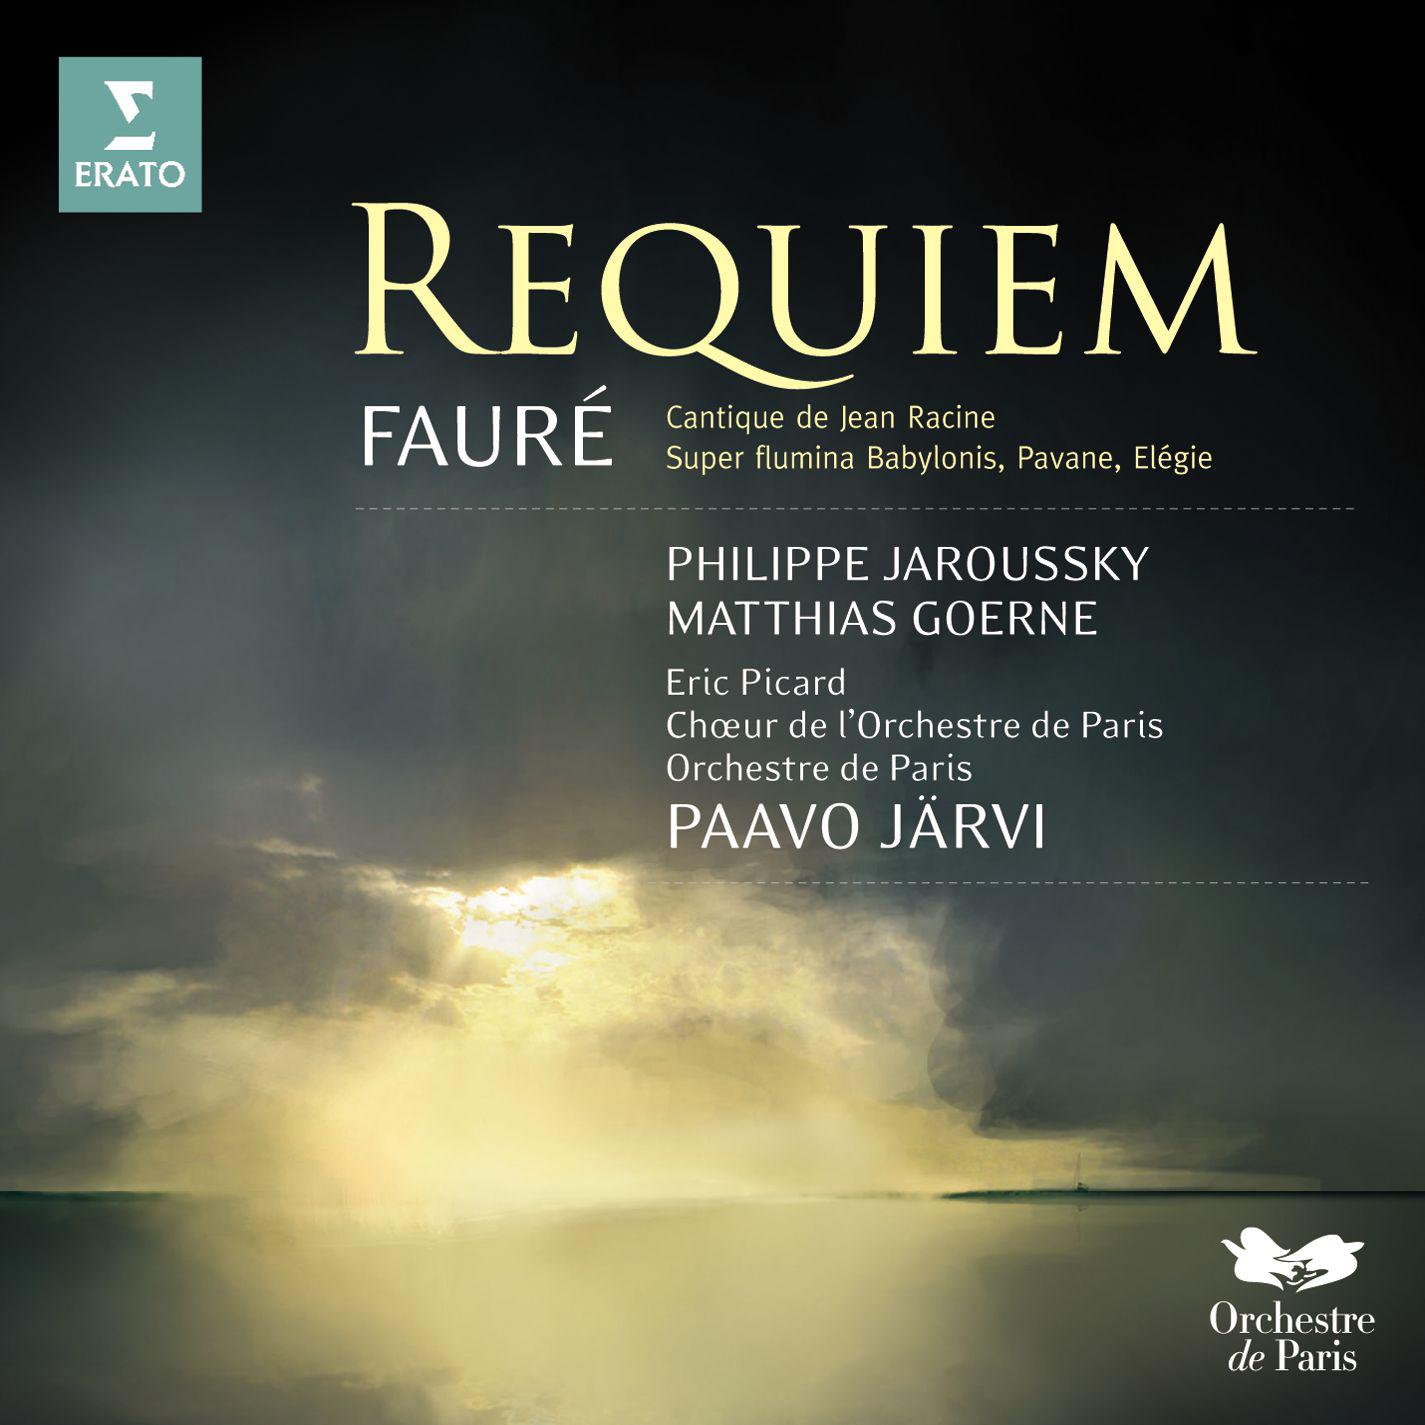 Faure Requiem, Cantique de Jean Racine